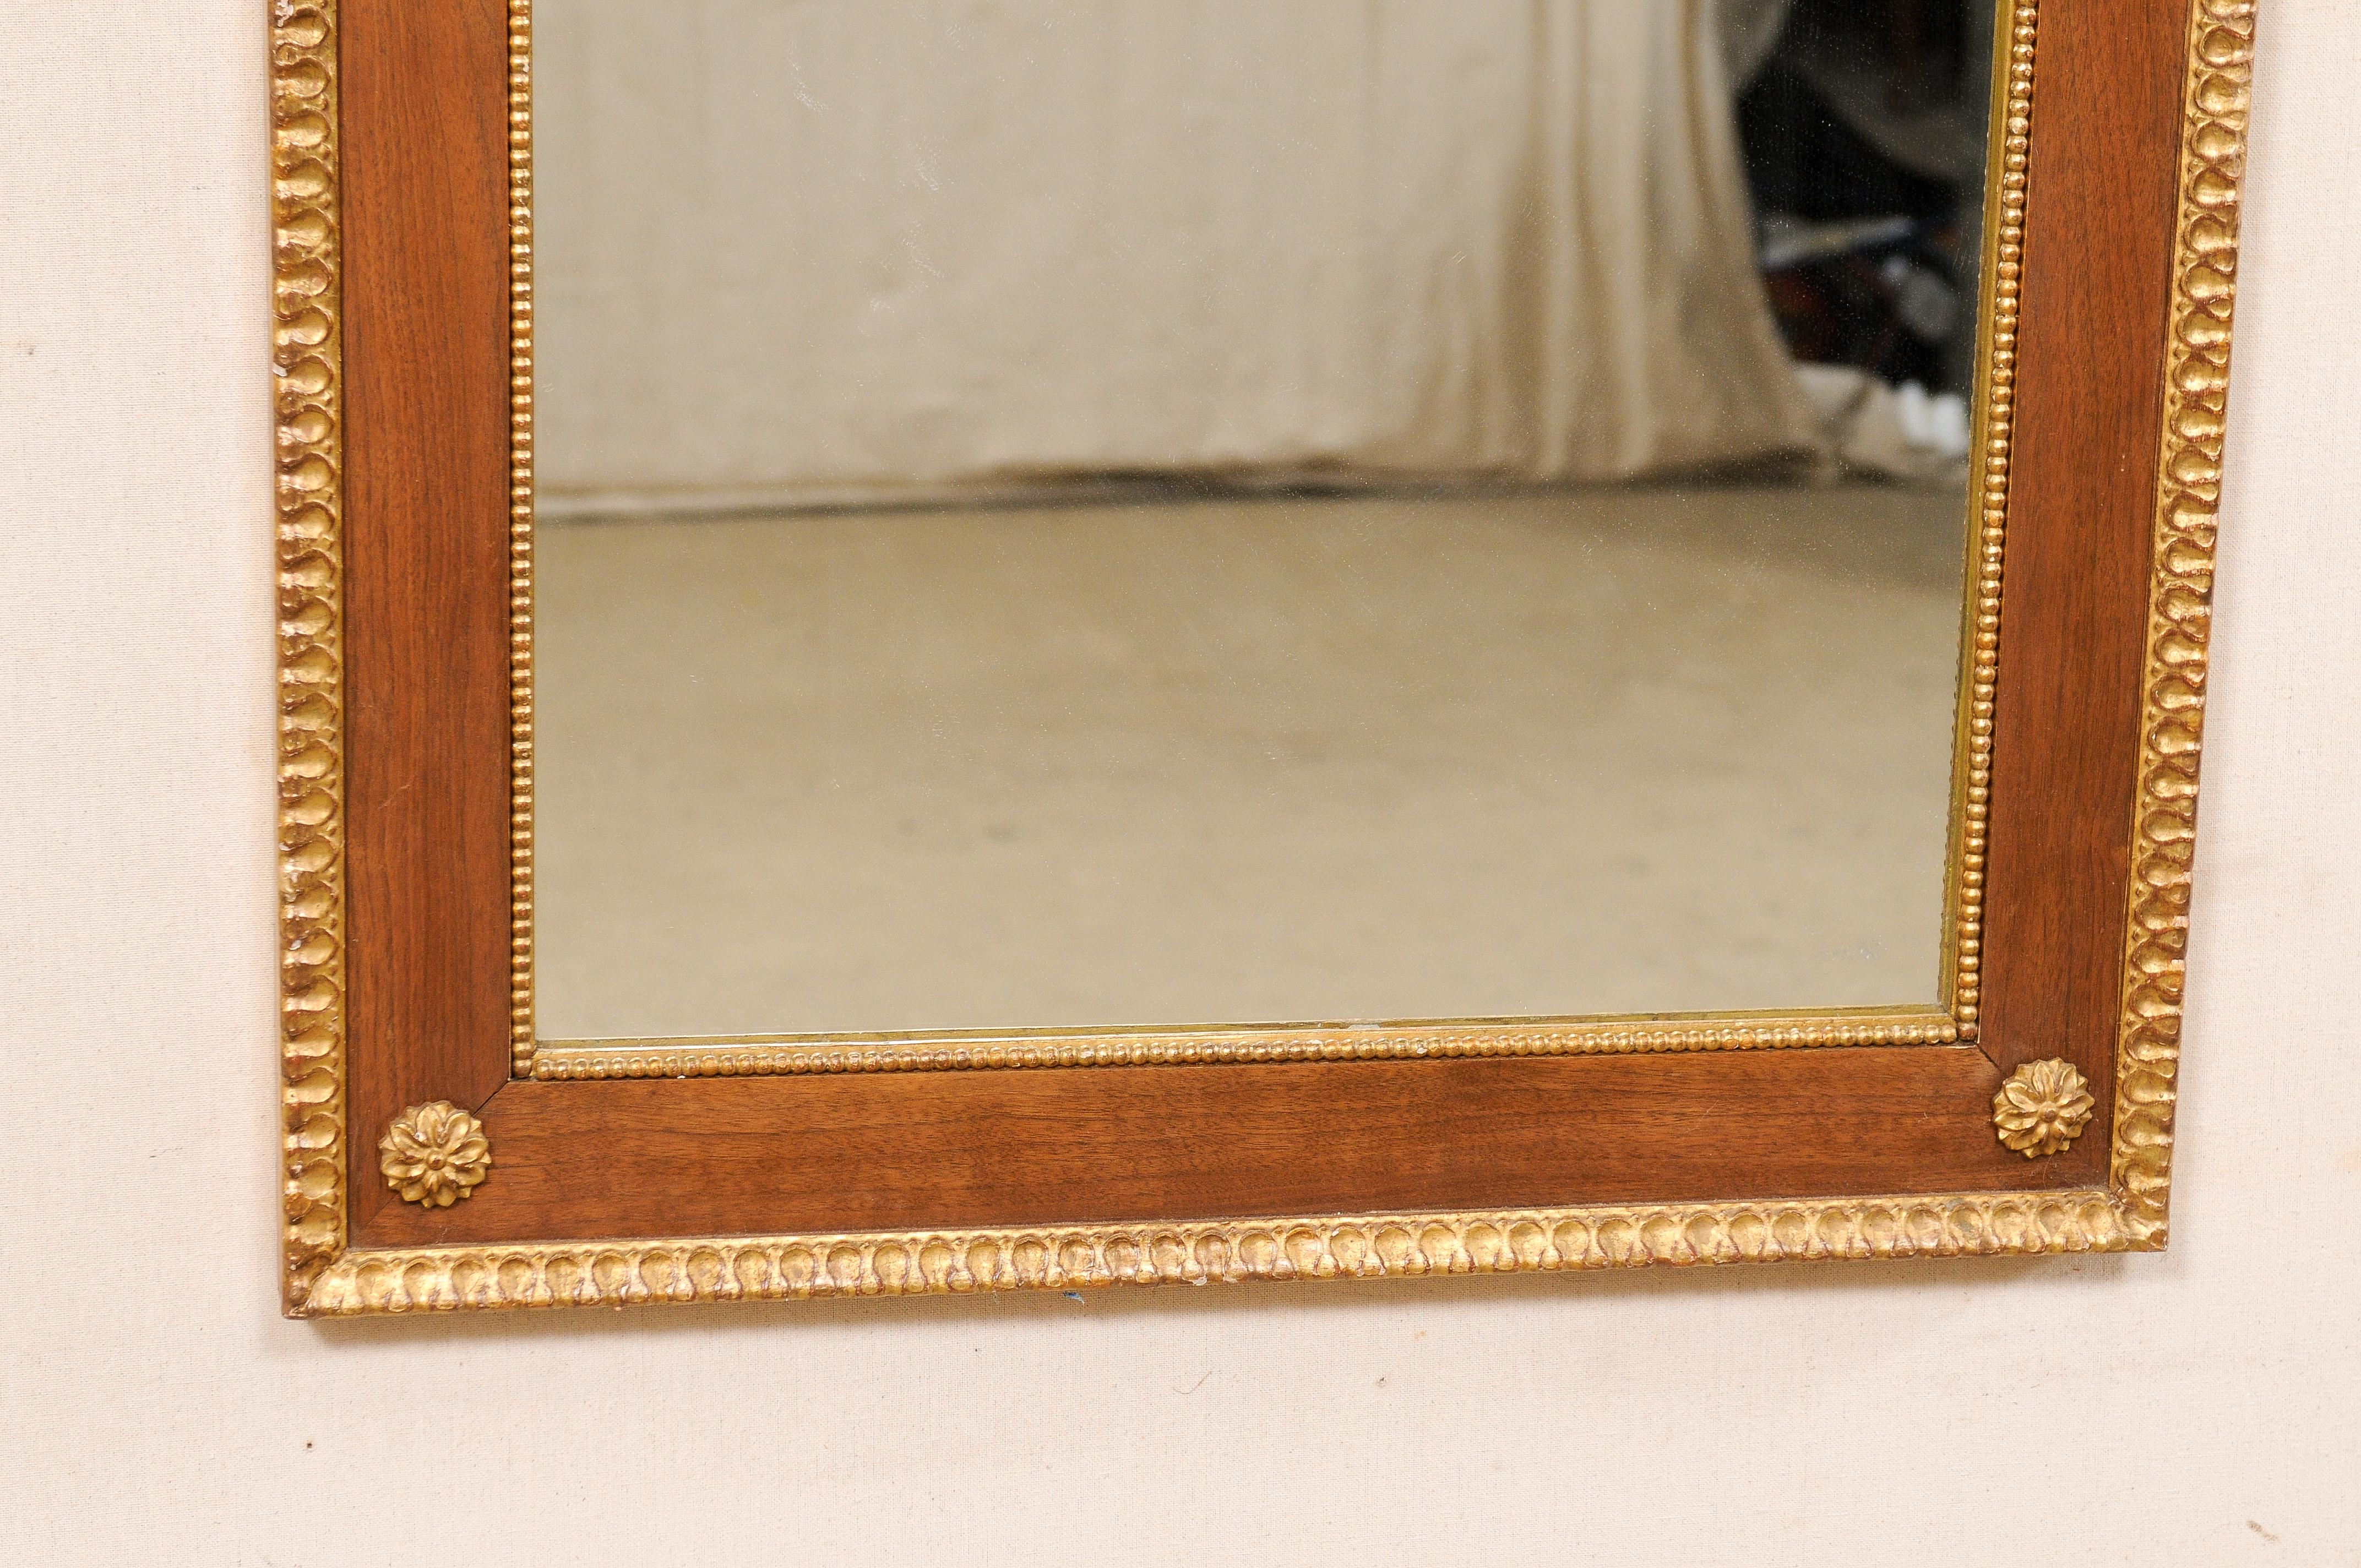 Italian Antique Trumeau Mirror w/Original Gilt Finish & Musical Themed Accents In Good Condition For Sale In Atlanta, GA